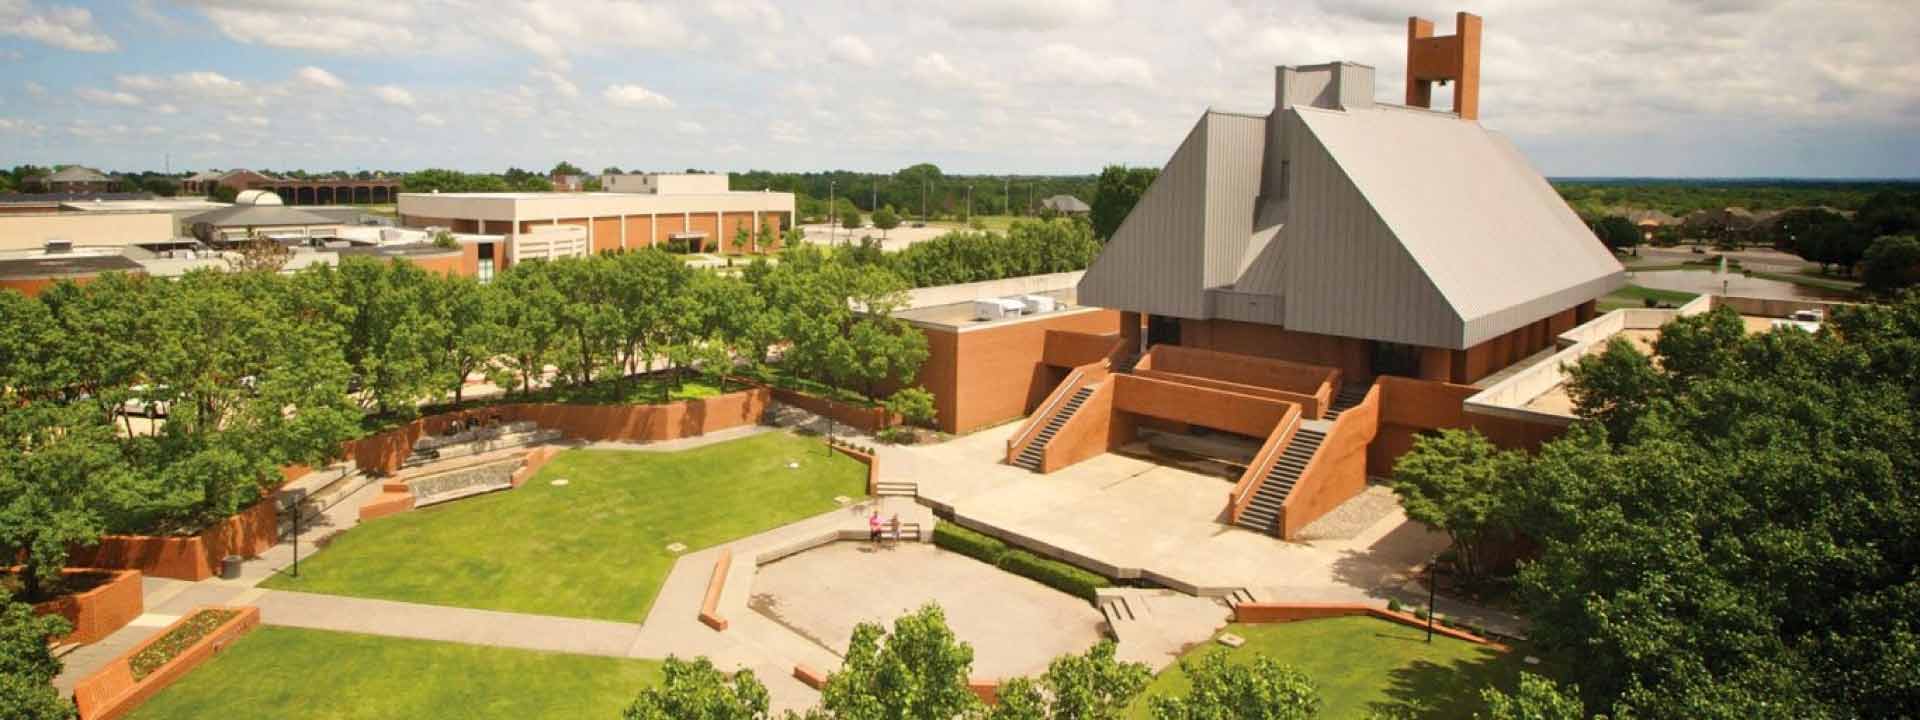 oklahoma-christian-university